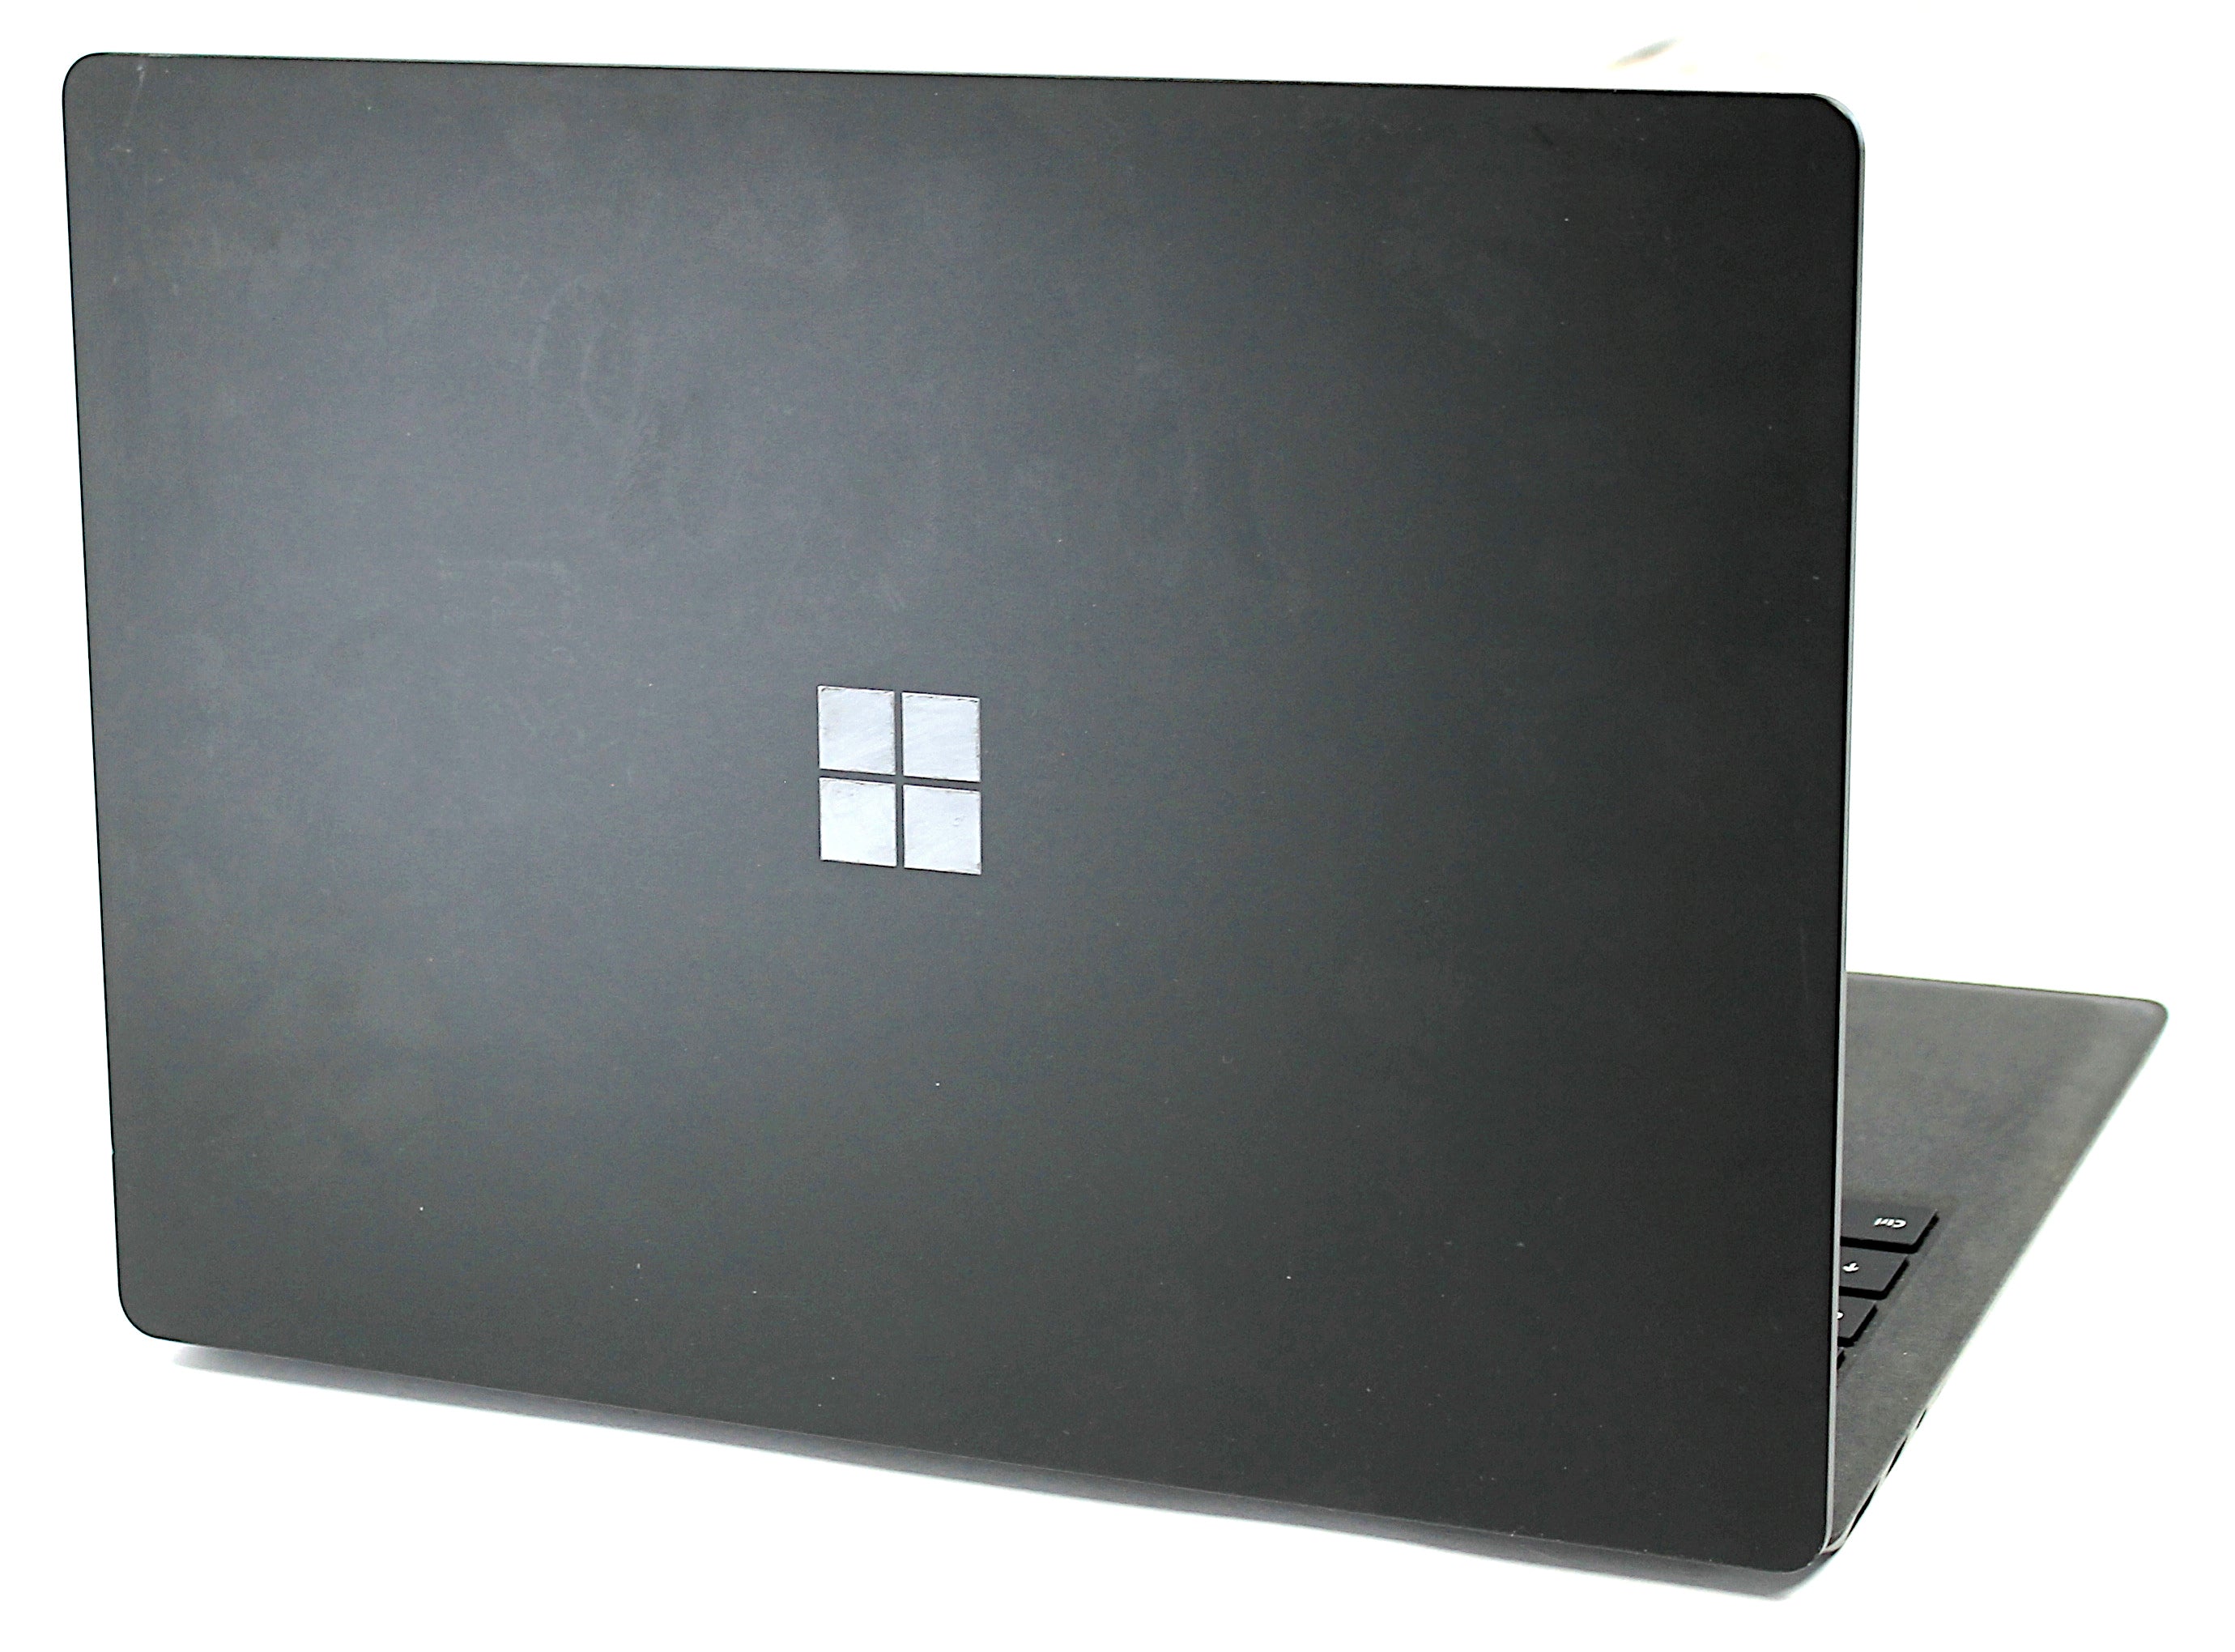 Microsoft Surface Laptop 2, 8th Gen Core i7, 8GB RAM, 256GB eMMC